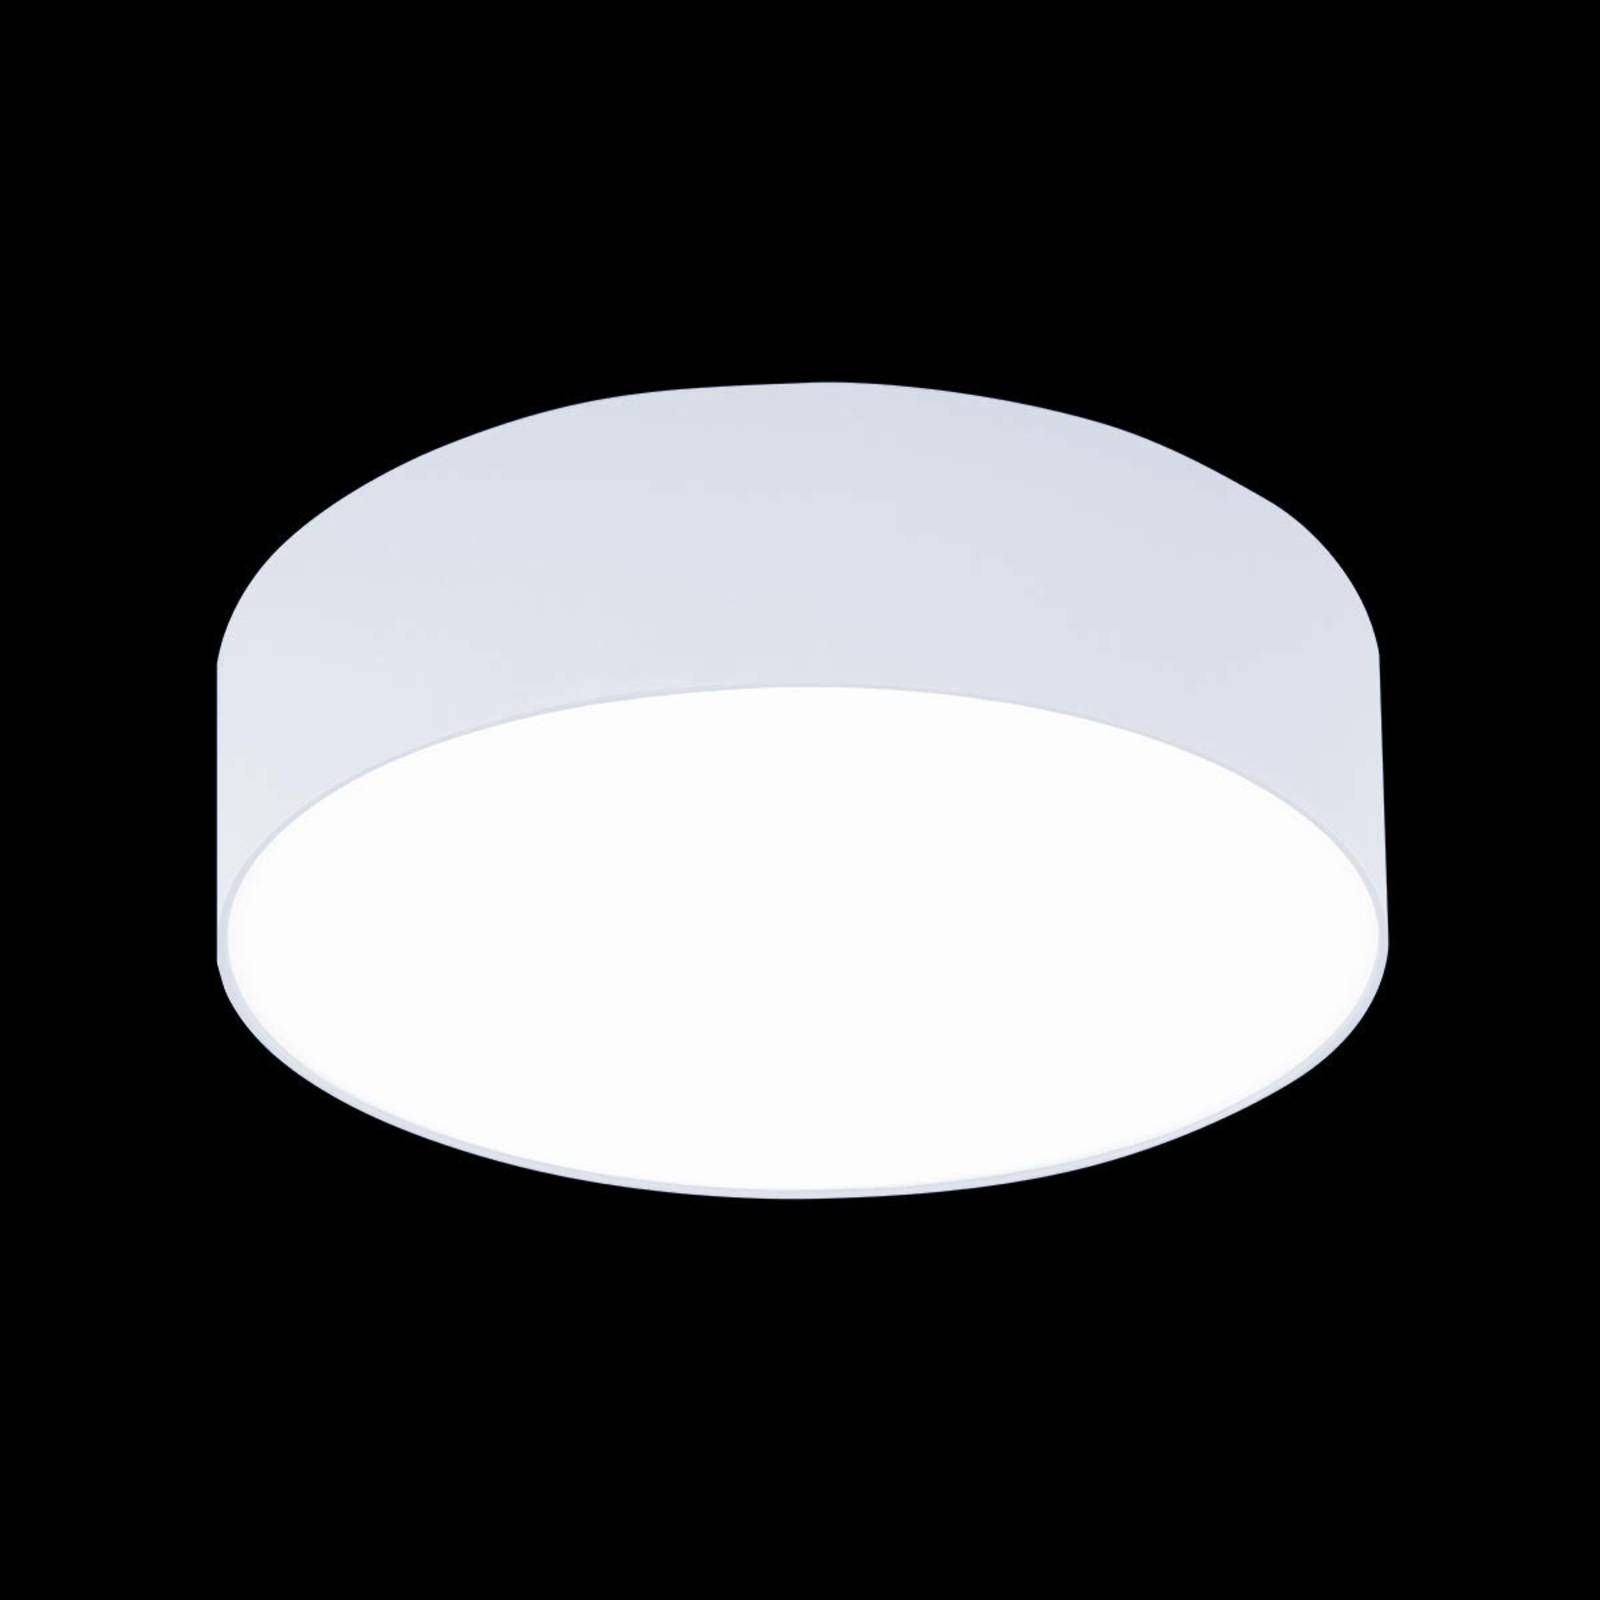 Hufnagel Biele stropné svietidlo Mara, 50 cm, Obývacia izba / jedáleň, chinc, E27, 57W, K: 17cm